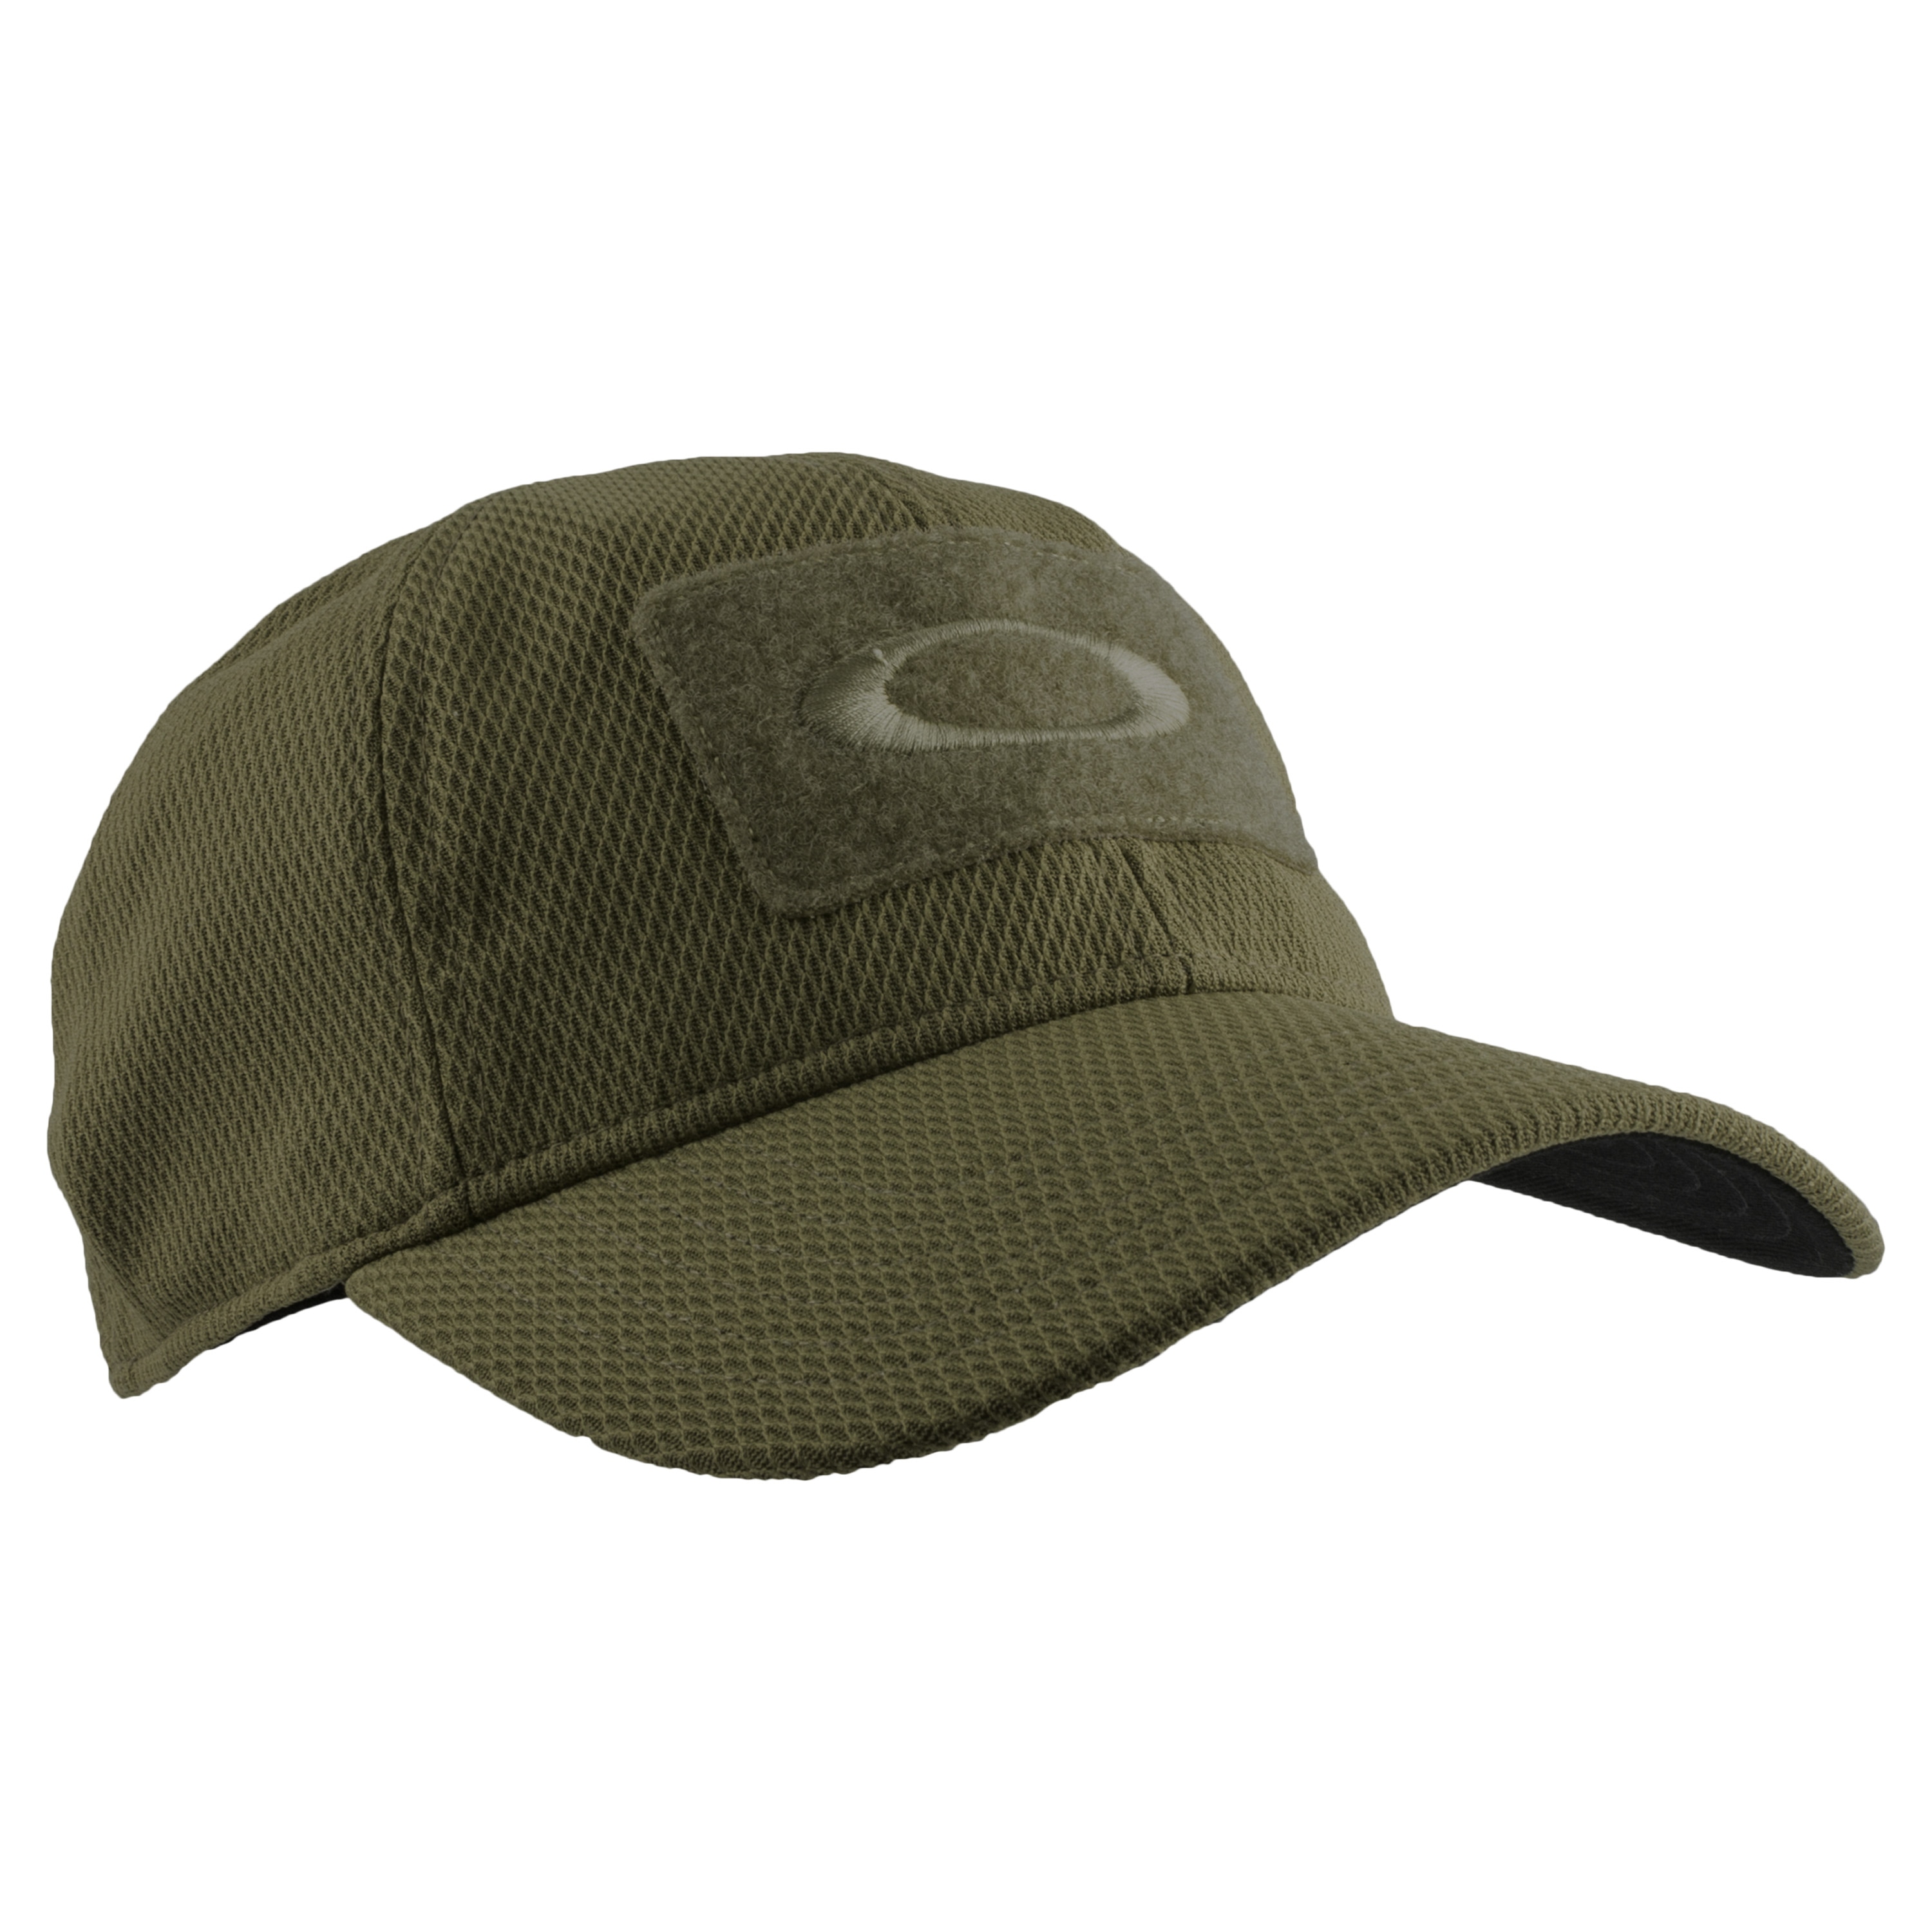 Baseball Cap Oakley Mk2 Mod 1 Olive Baseball Cap Oakley Mk2 Mod 1 Olive Baseball Caps Hats Head Gear Clothing